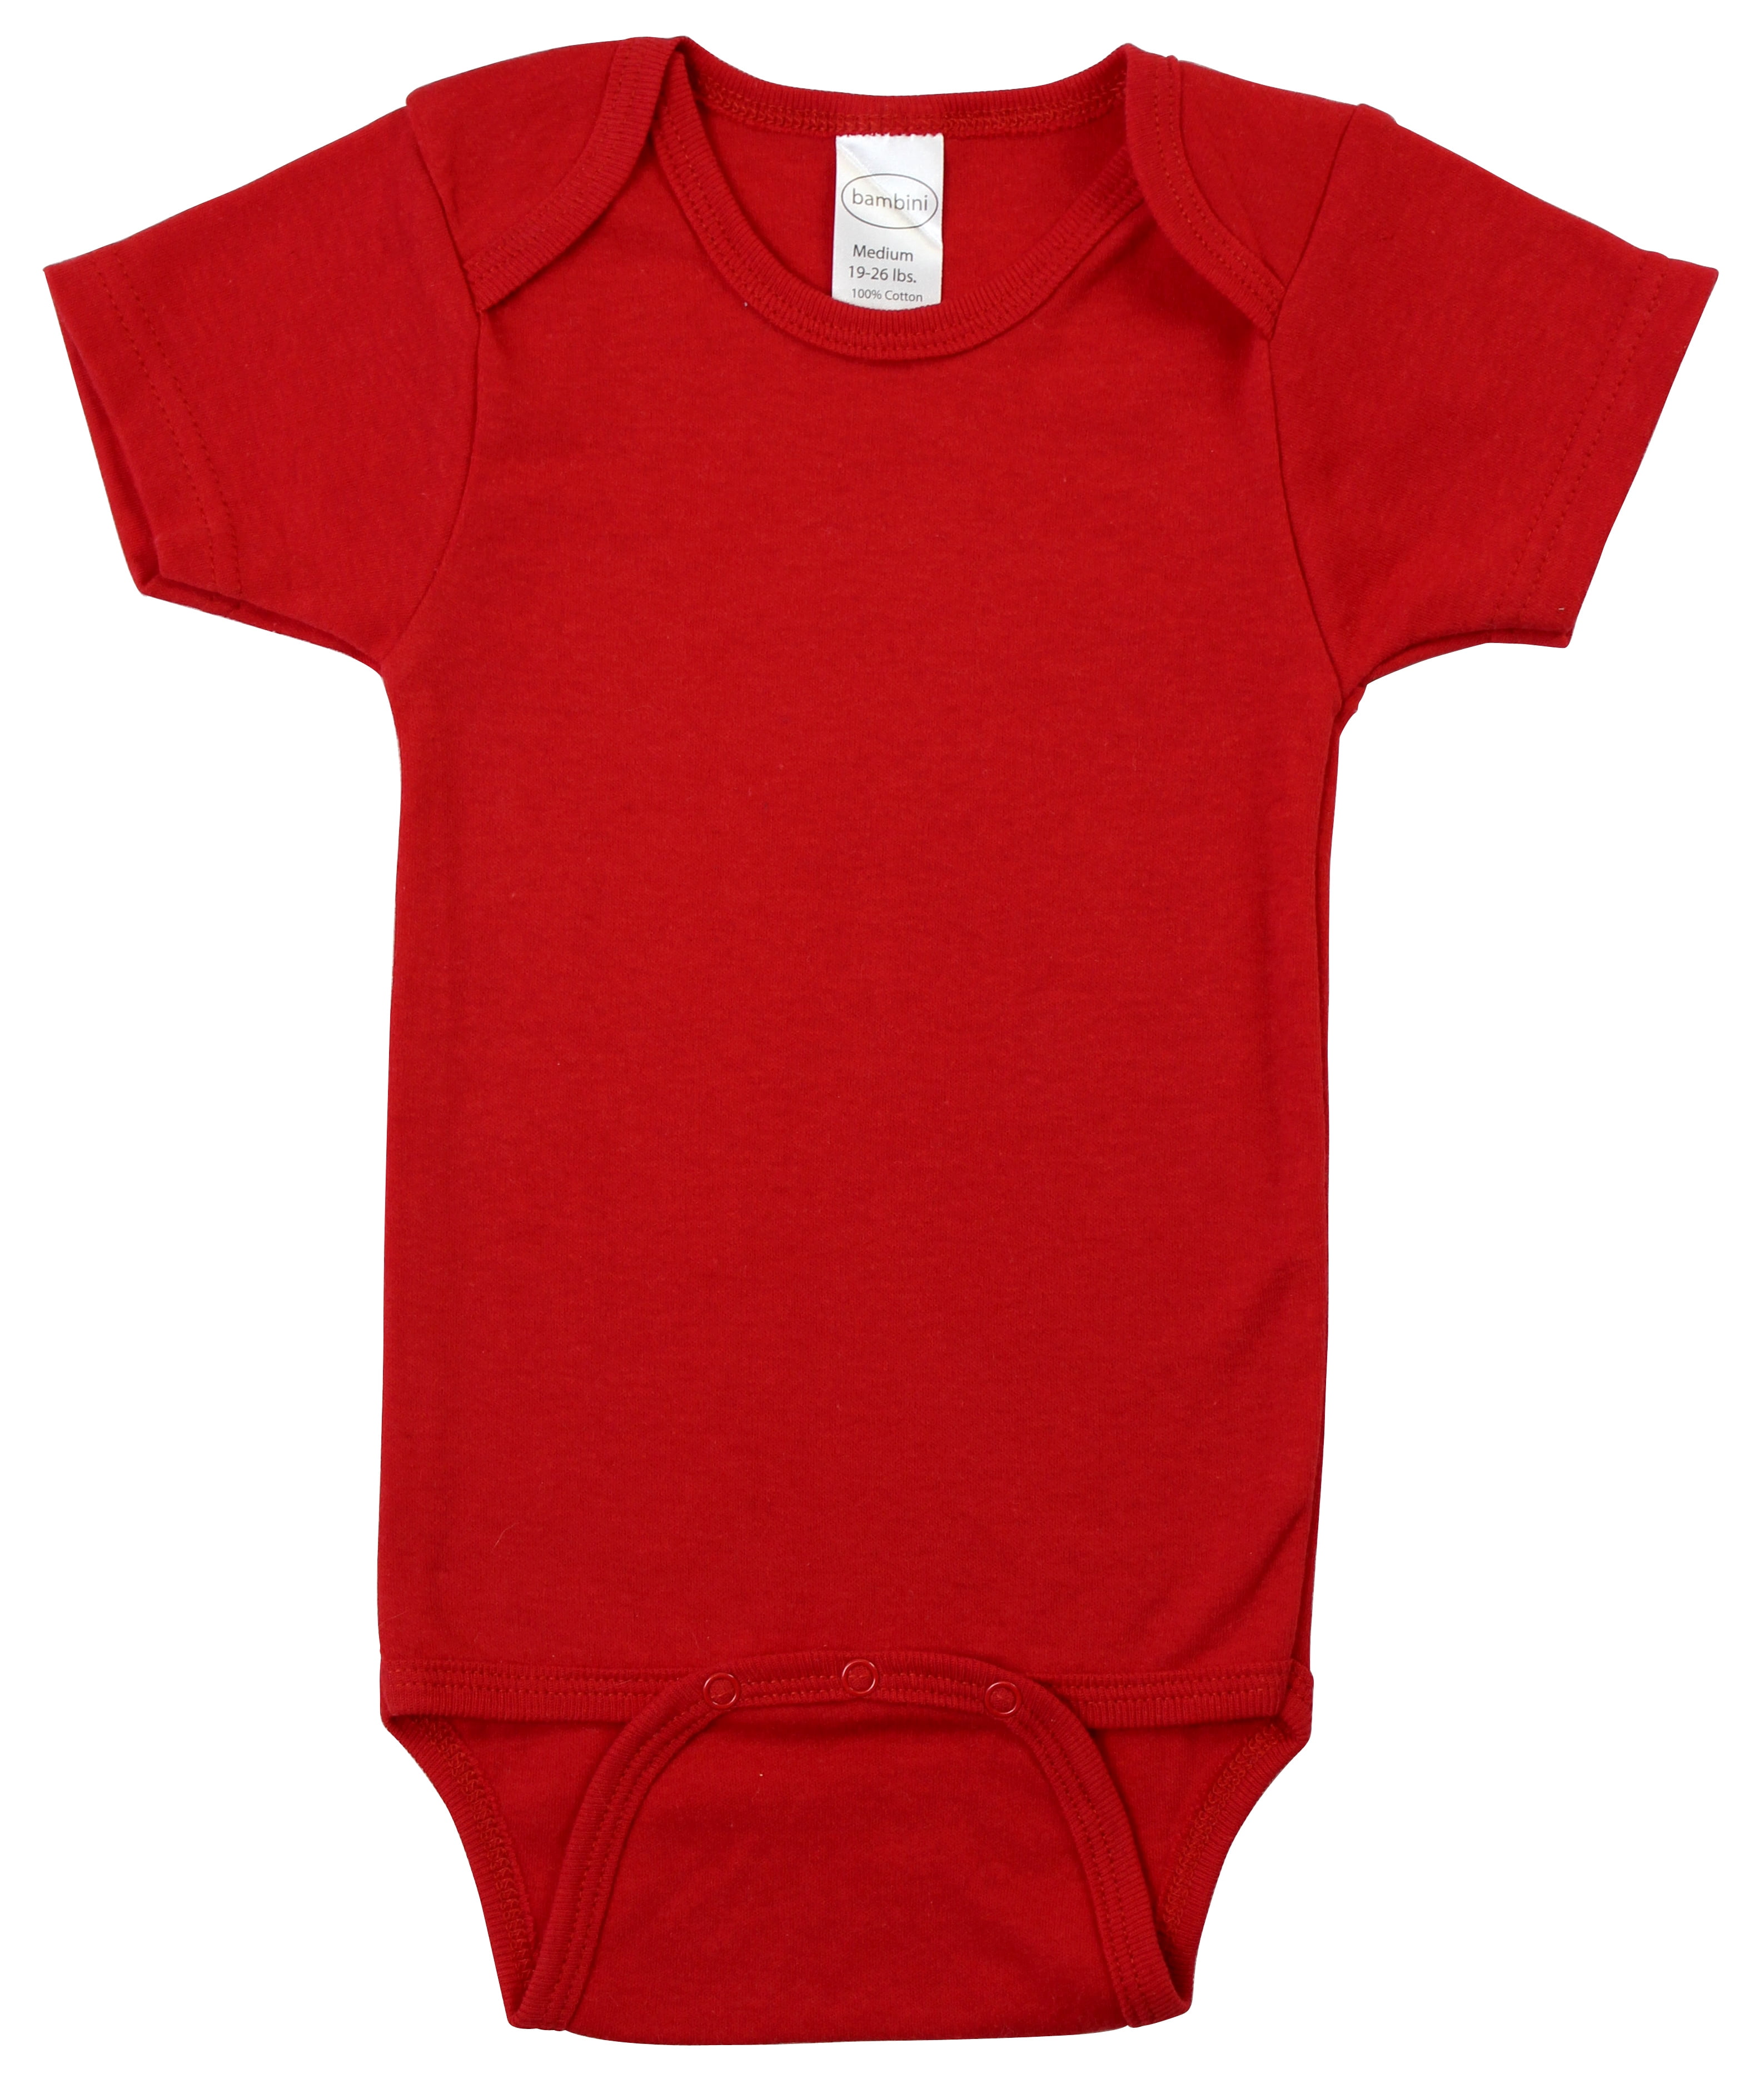 Ls-0147 Interlock Short Sleeve Bodysuit, Red - Medium